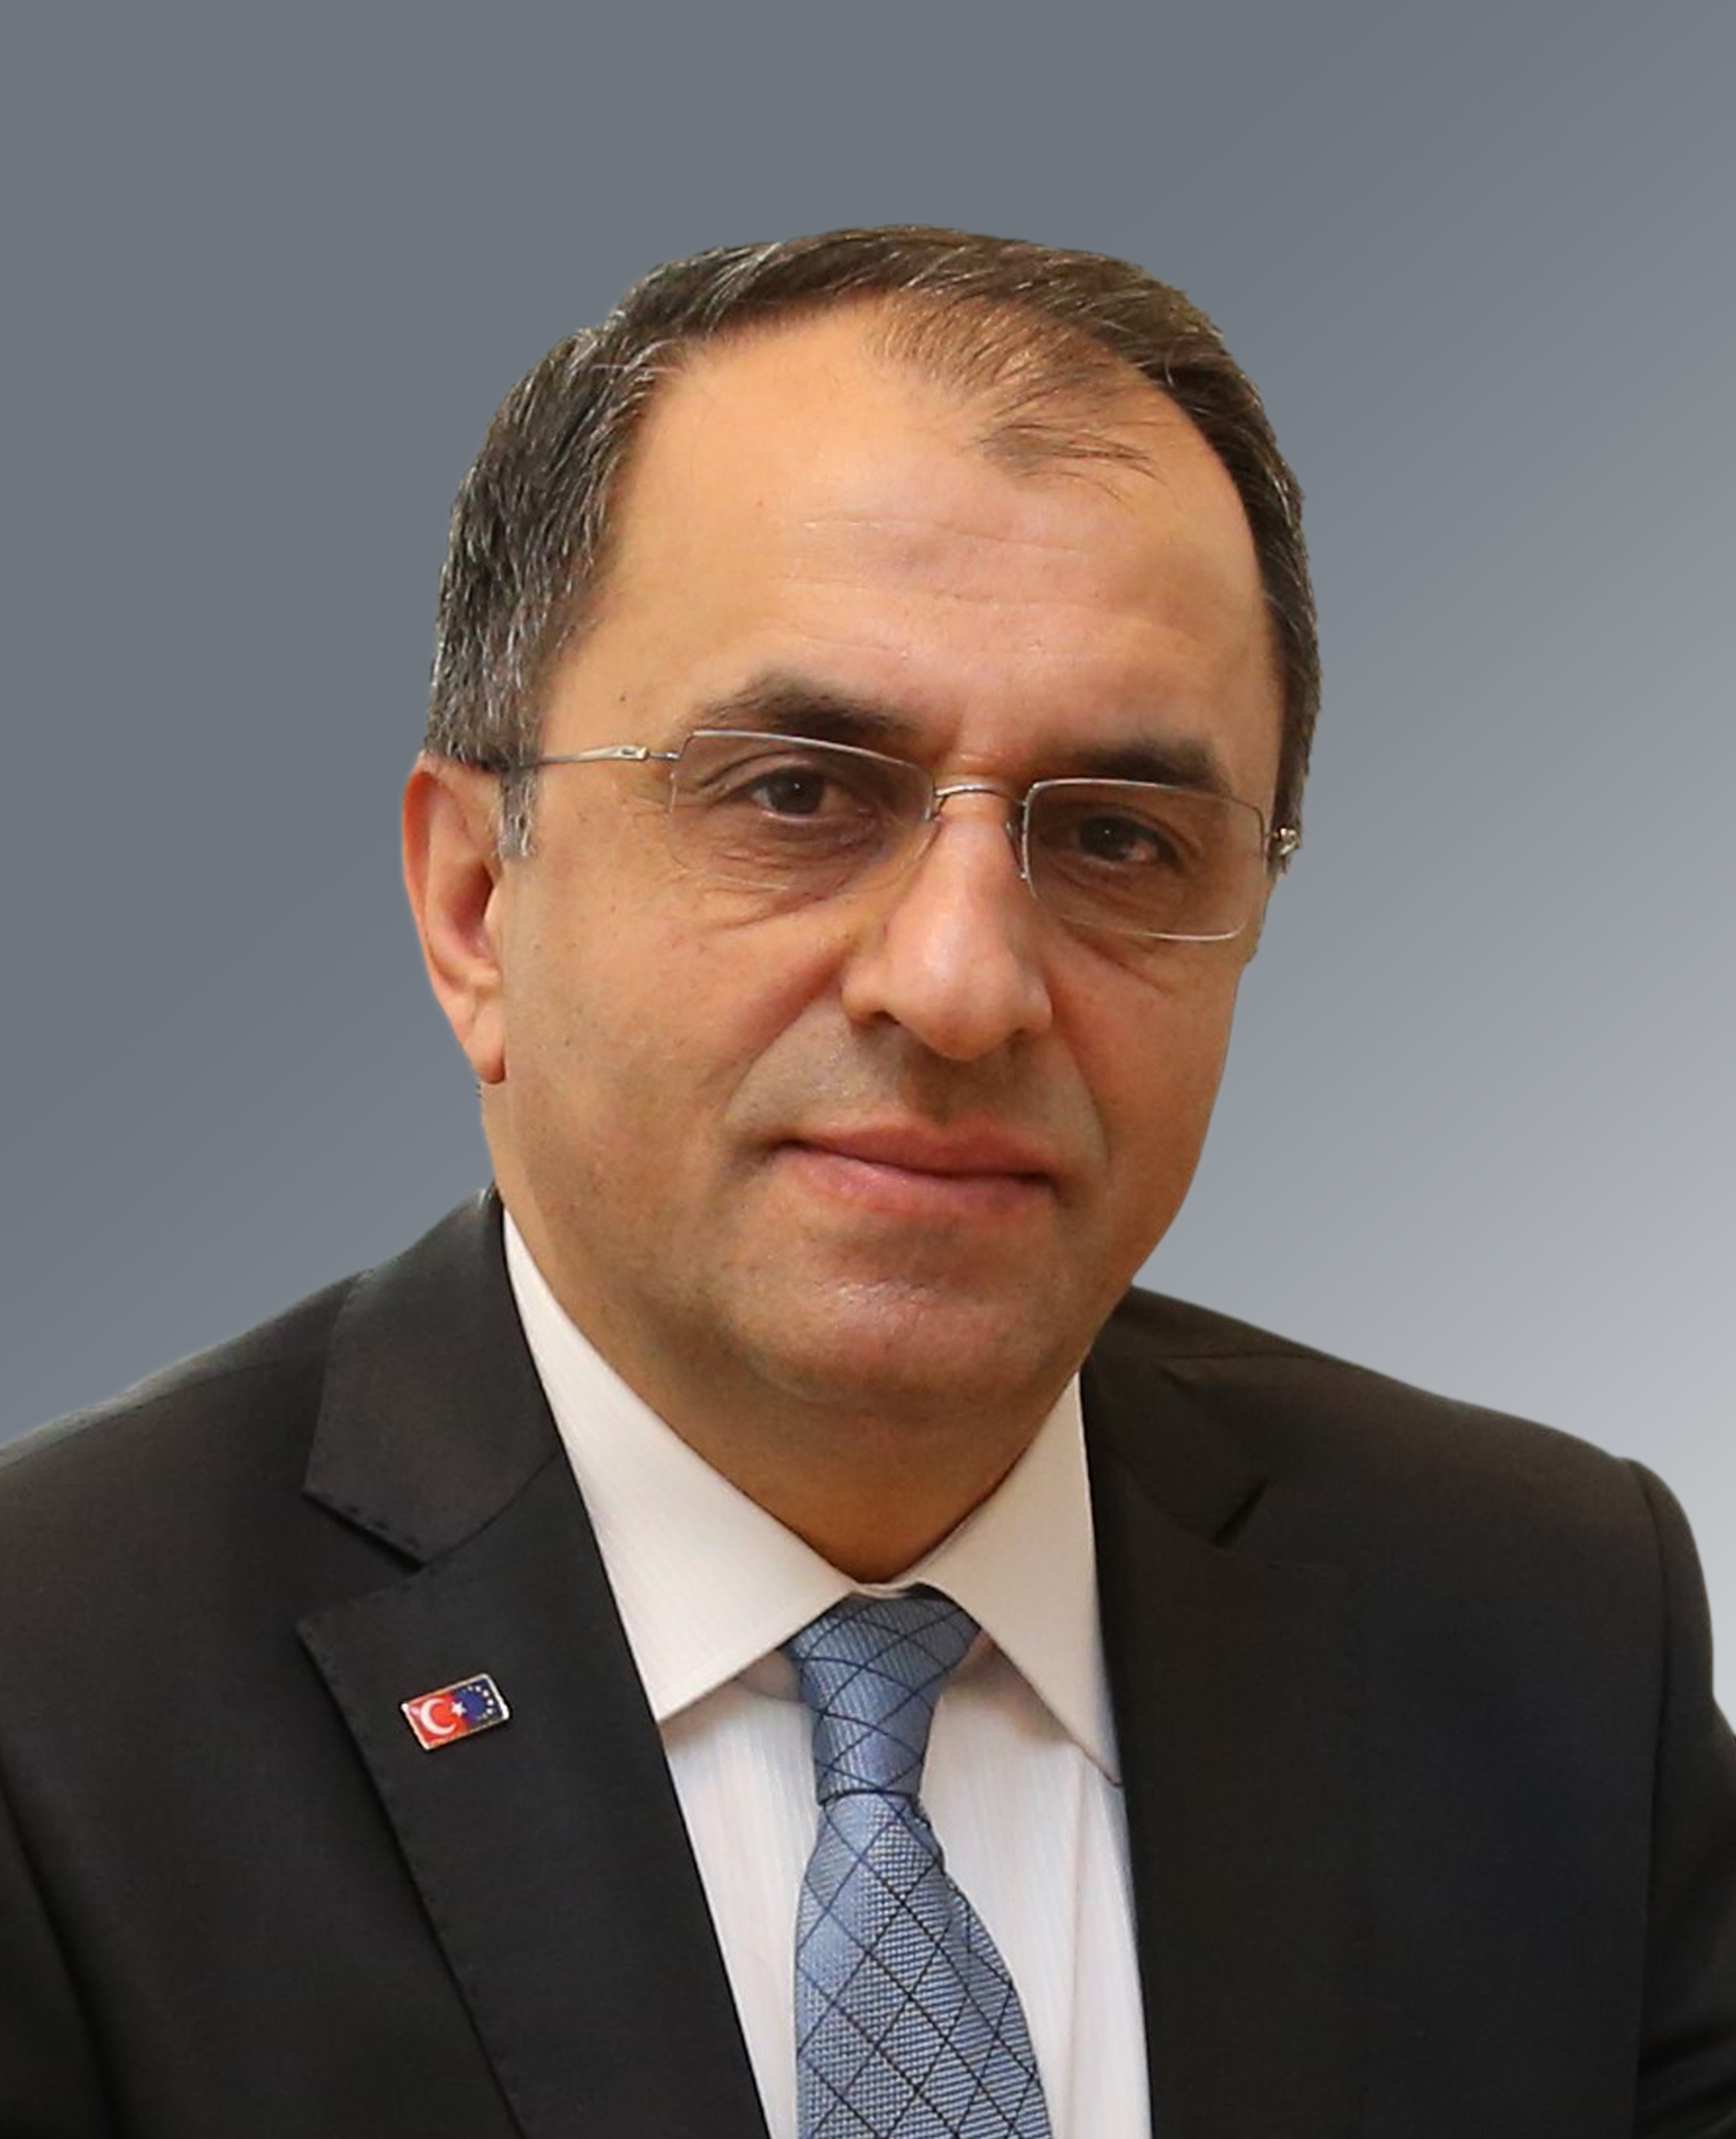 Dr. Fatih Hasdemir